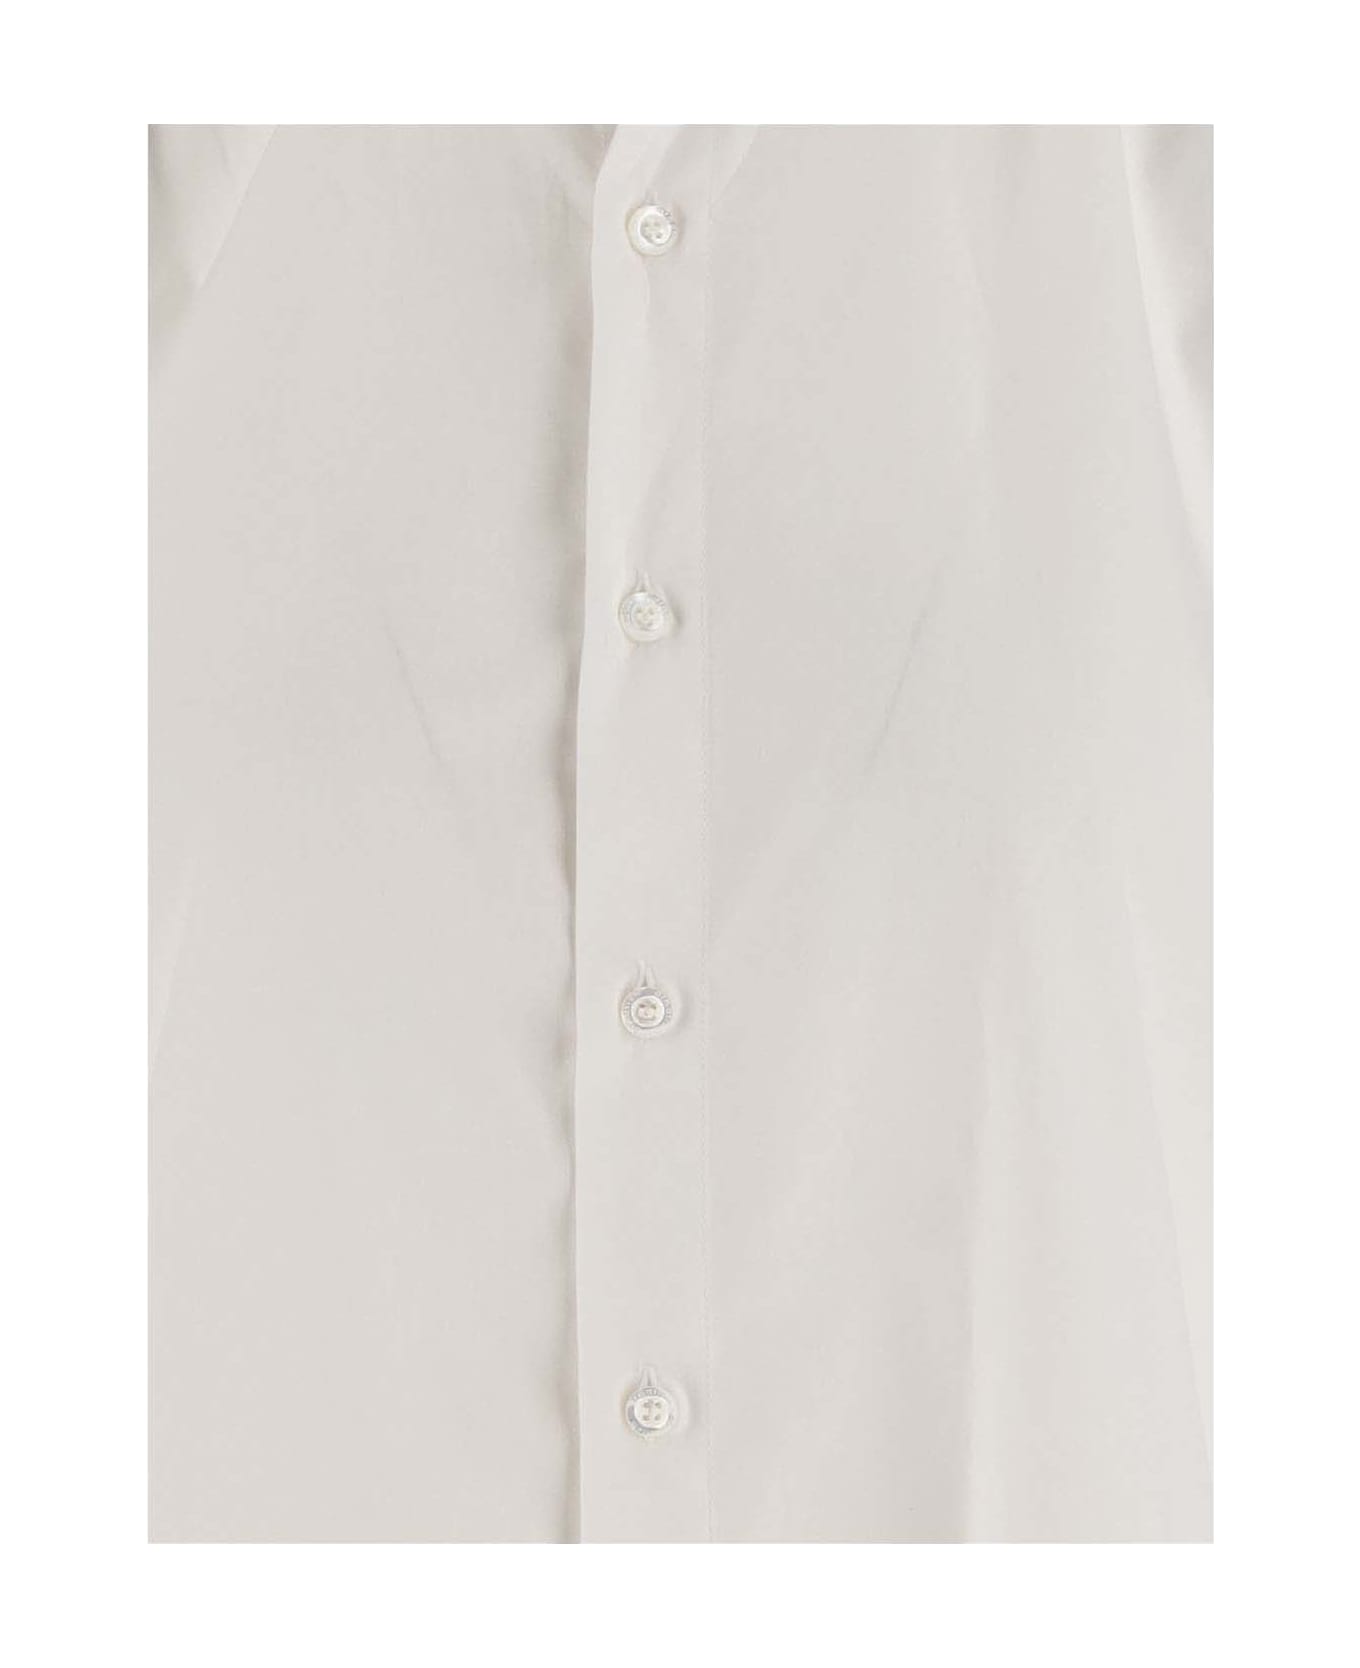 Armarium Cotton Shirt - White シャツ